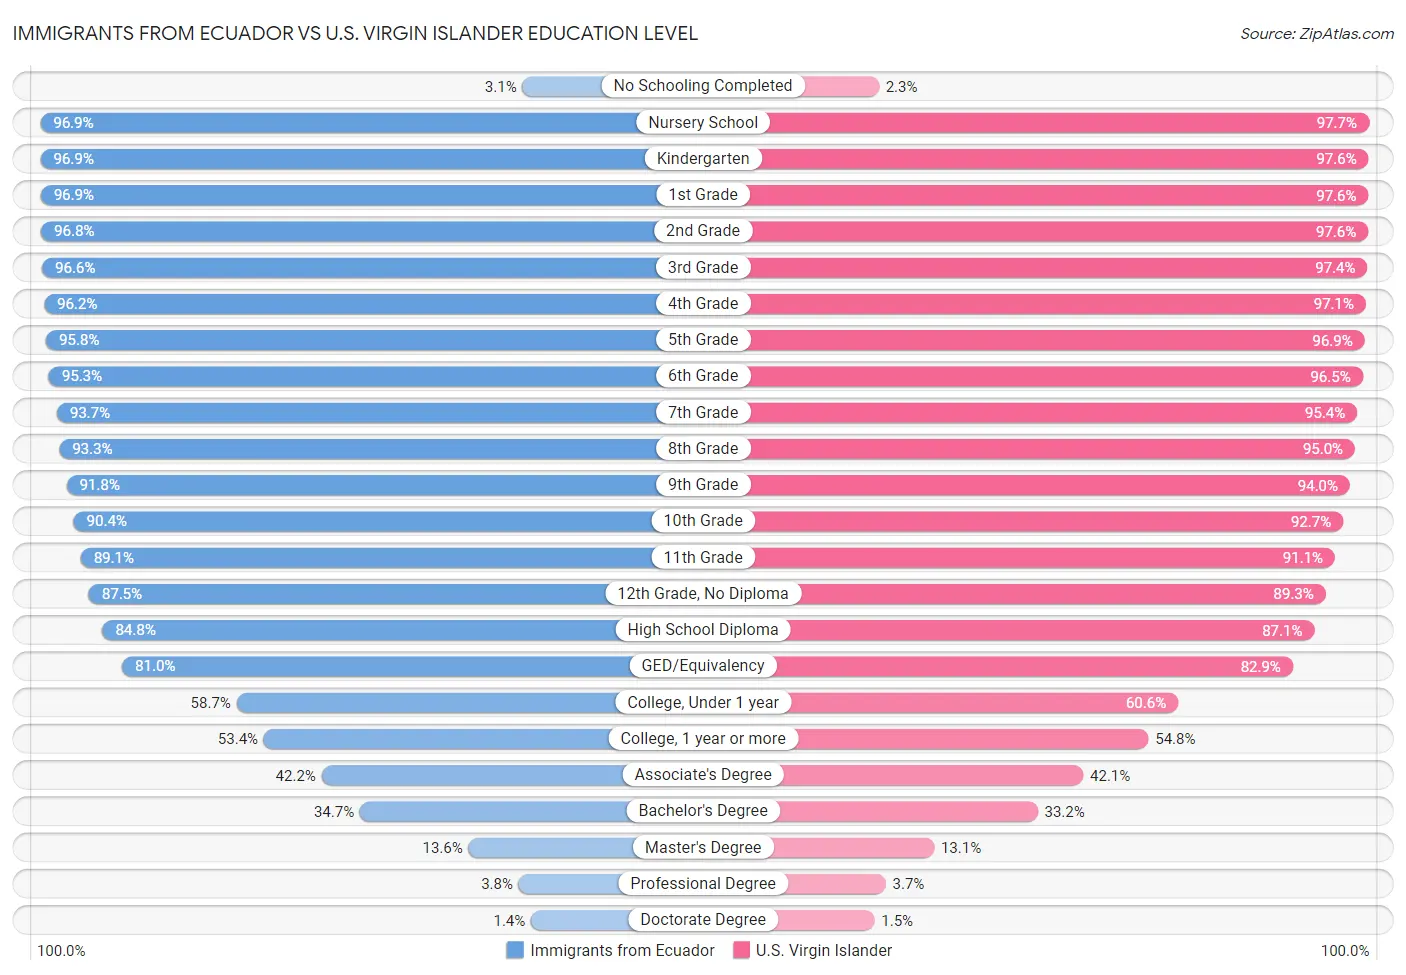 Immigrants from Ecuador vs U.S. Virgin Islander Education Level